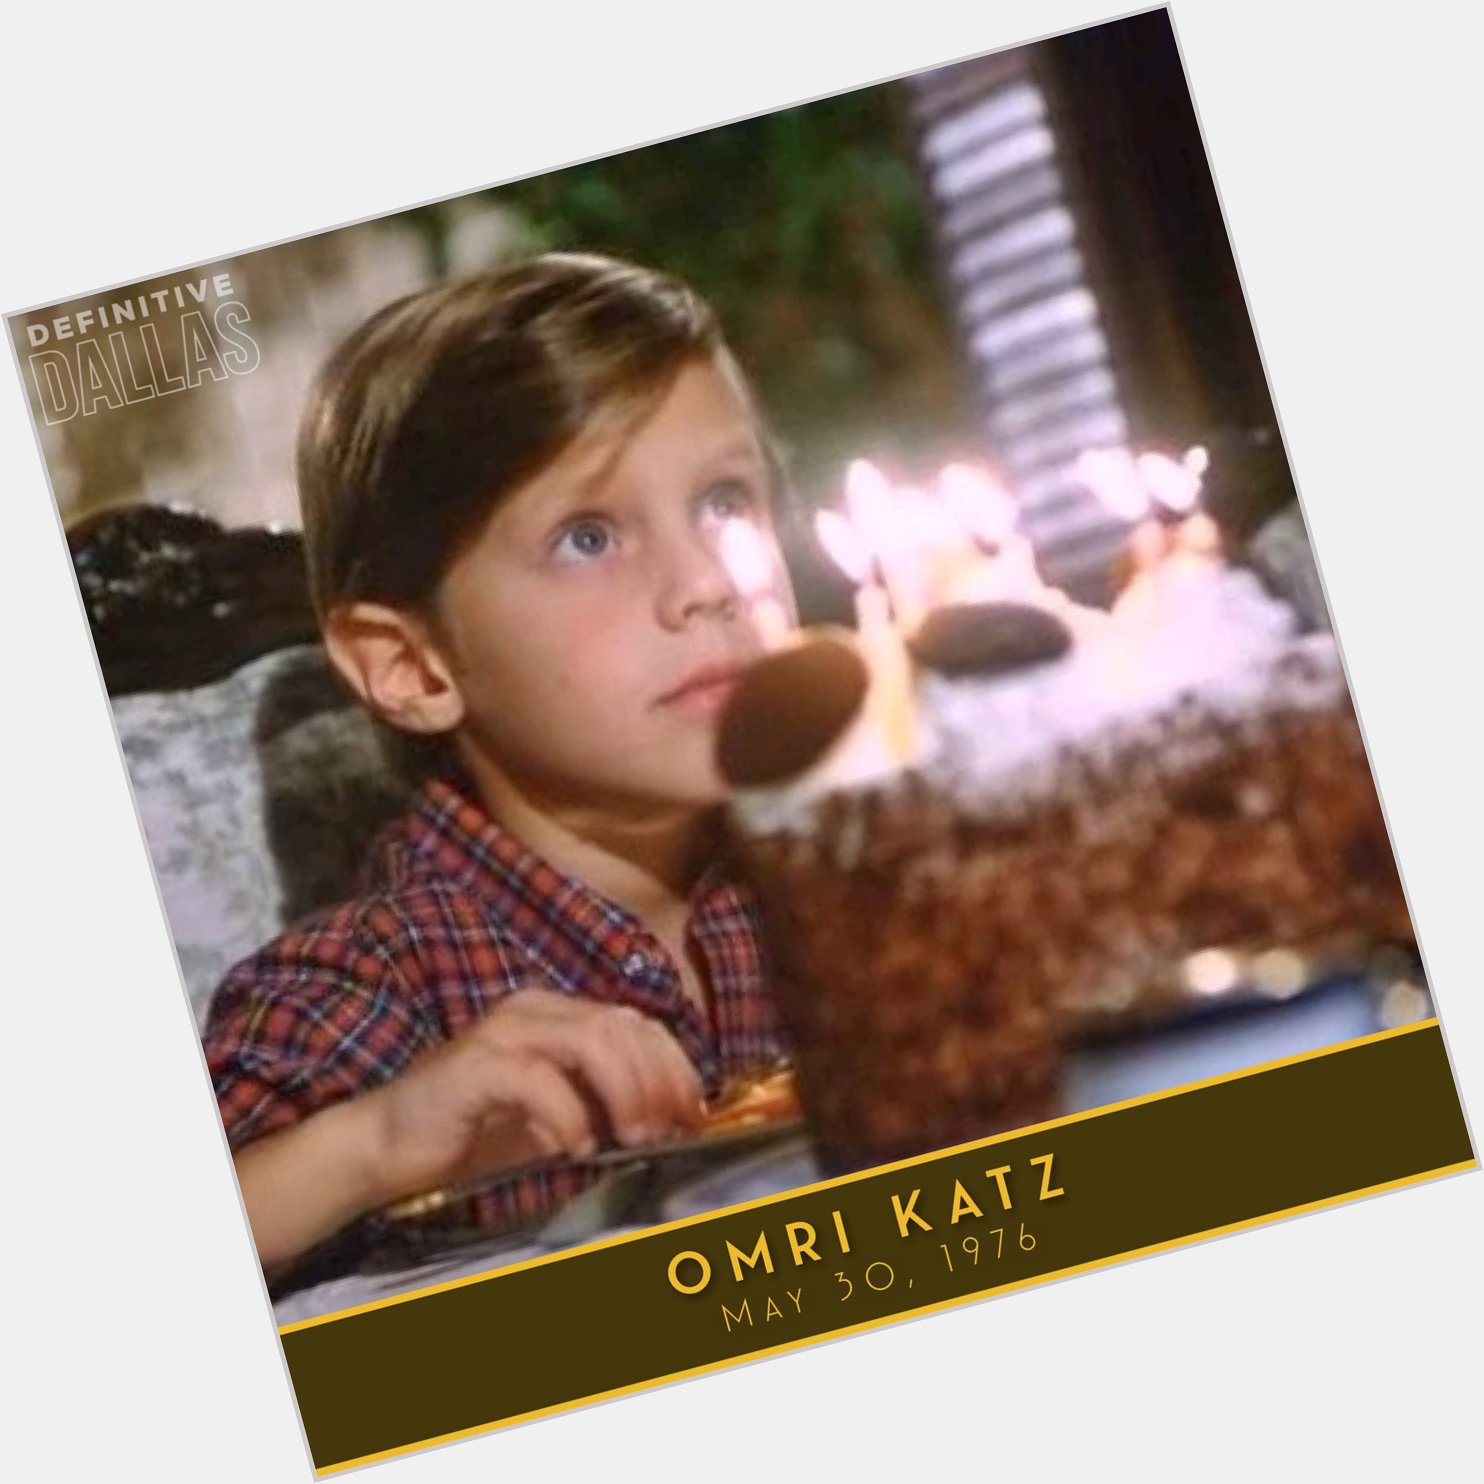 Wishing happy birthday to Omri Katz today! 